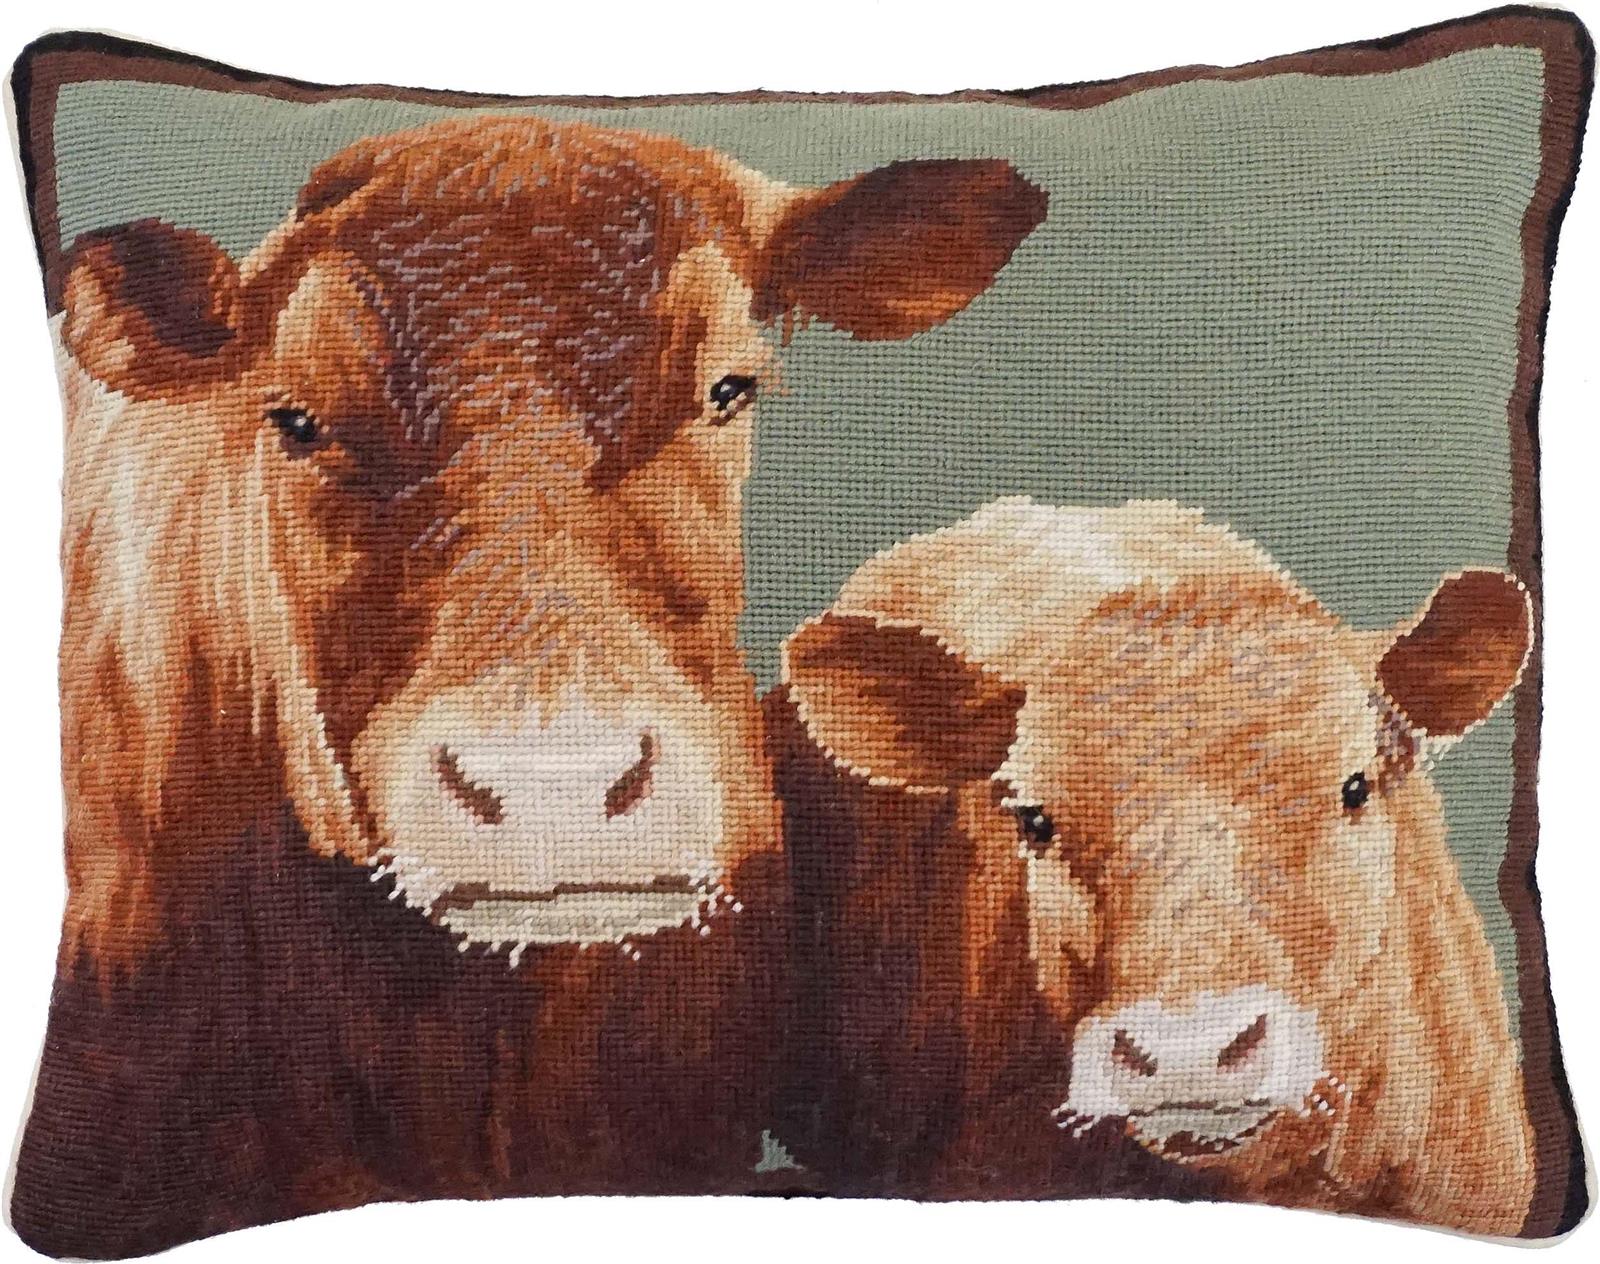 Pillow Throw Needlepoint Cow and Calf 16x20 20x16 Cream White Green Brown Cotton-Image 1